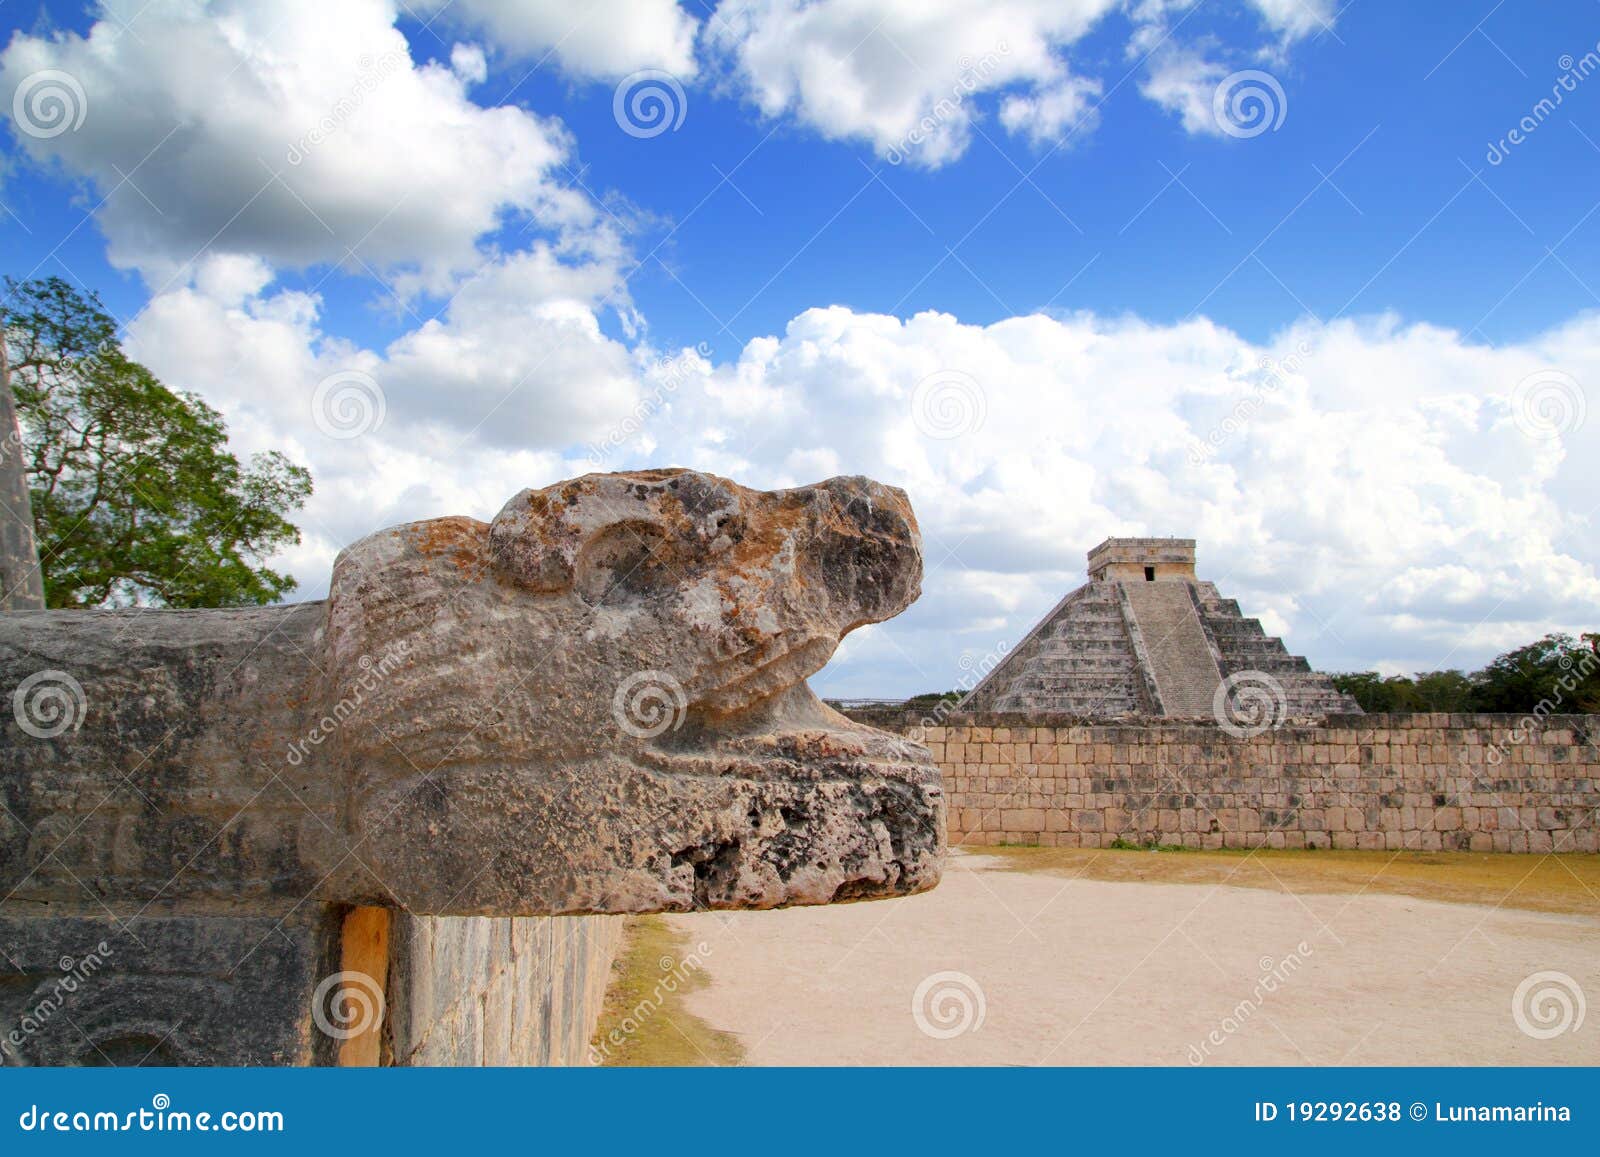 chichen itza jaguar and kukulkan mayan pyramid